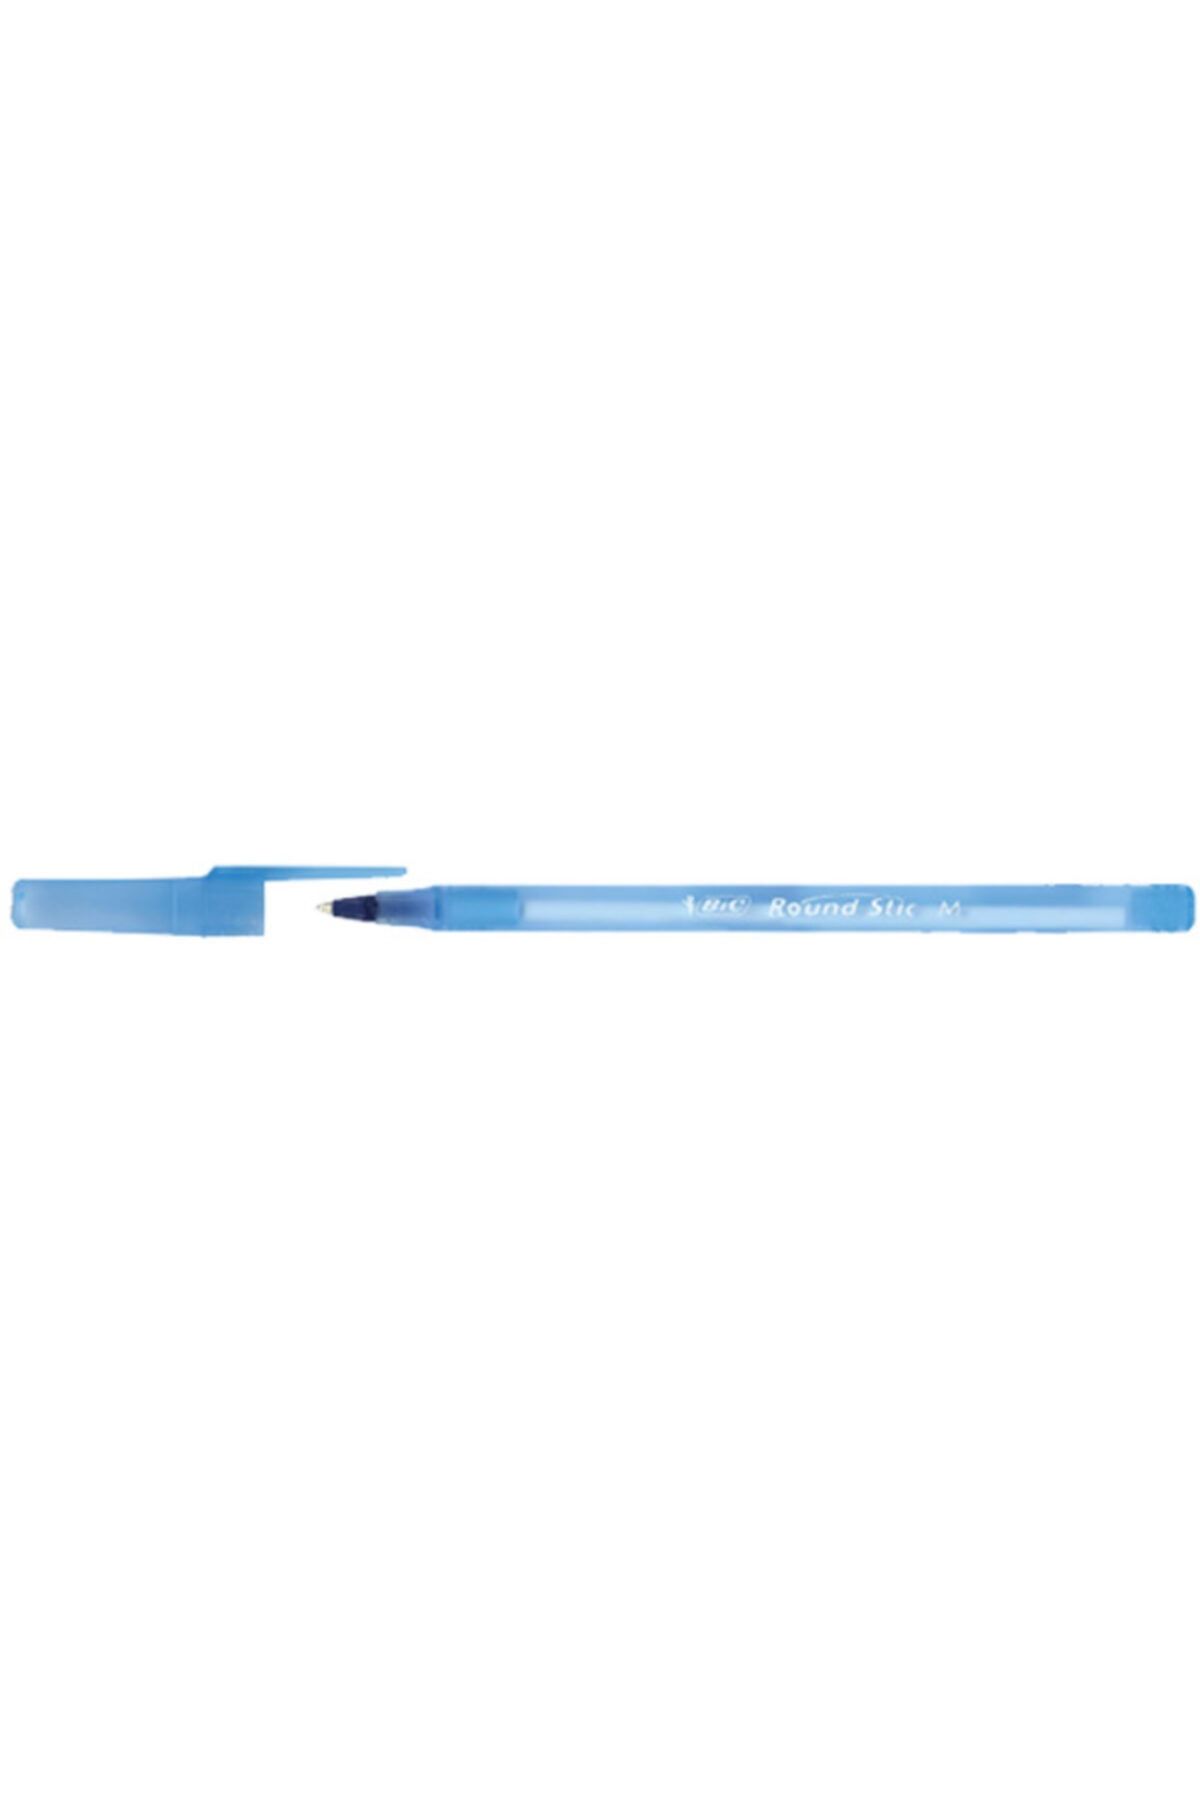 Ручка bic round. Ручка шариковая BIC Round Stic (0.4мм, синий цвет чернил) (921403). Ручка шариковая BIC раунд стик синяя, 921403,0,4 мм. Ручка шариковая BIC "Round Stic" синяя, 1,0мм. Ручка шариковая BIC раунд стик синяя, 921403,0,32 мм.